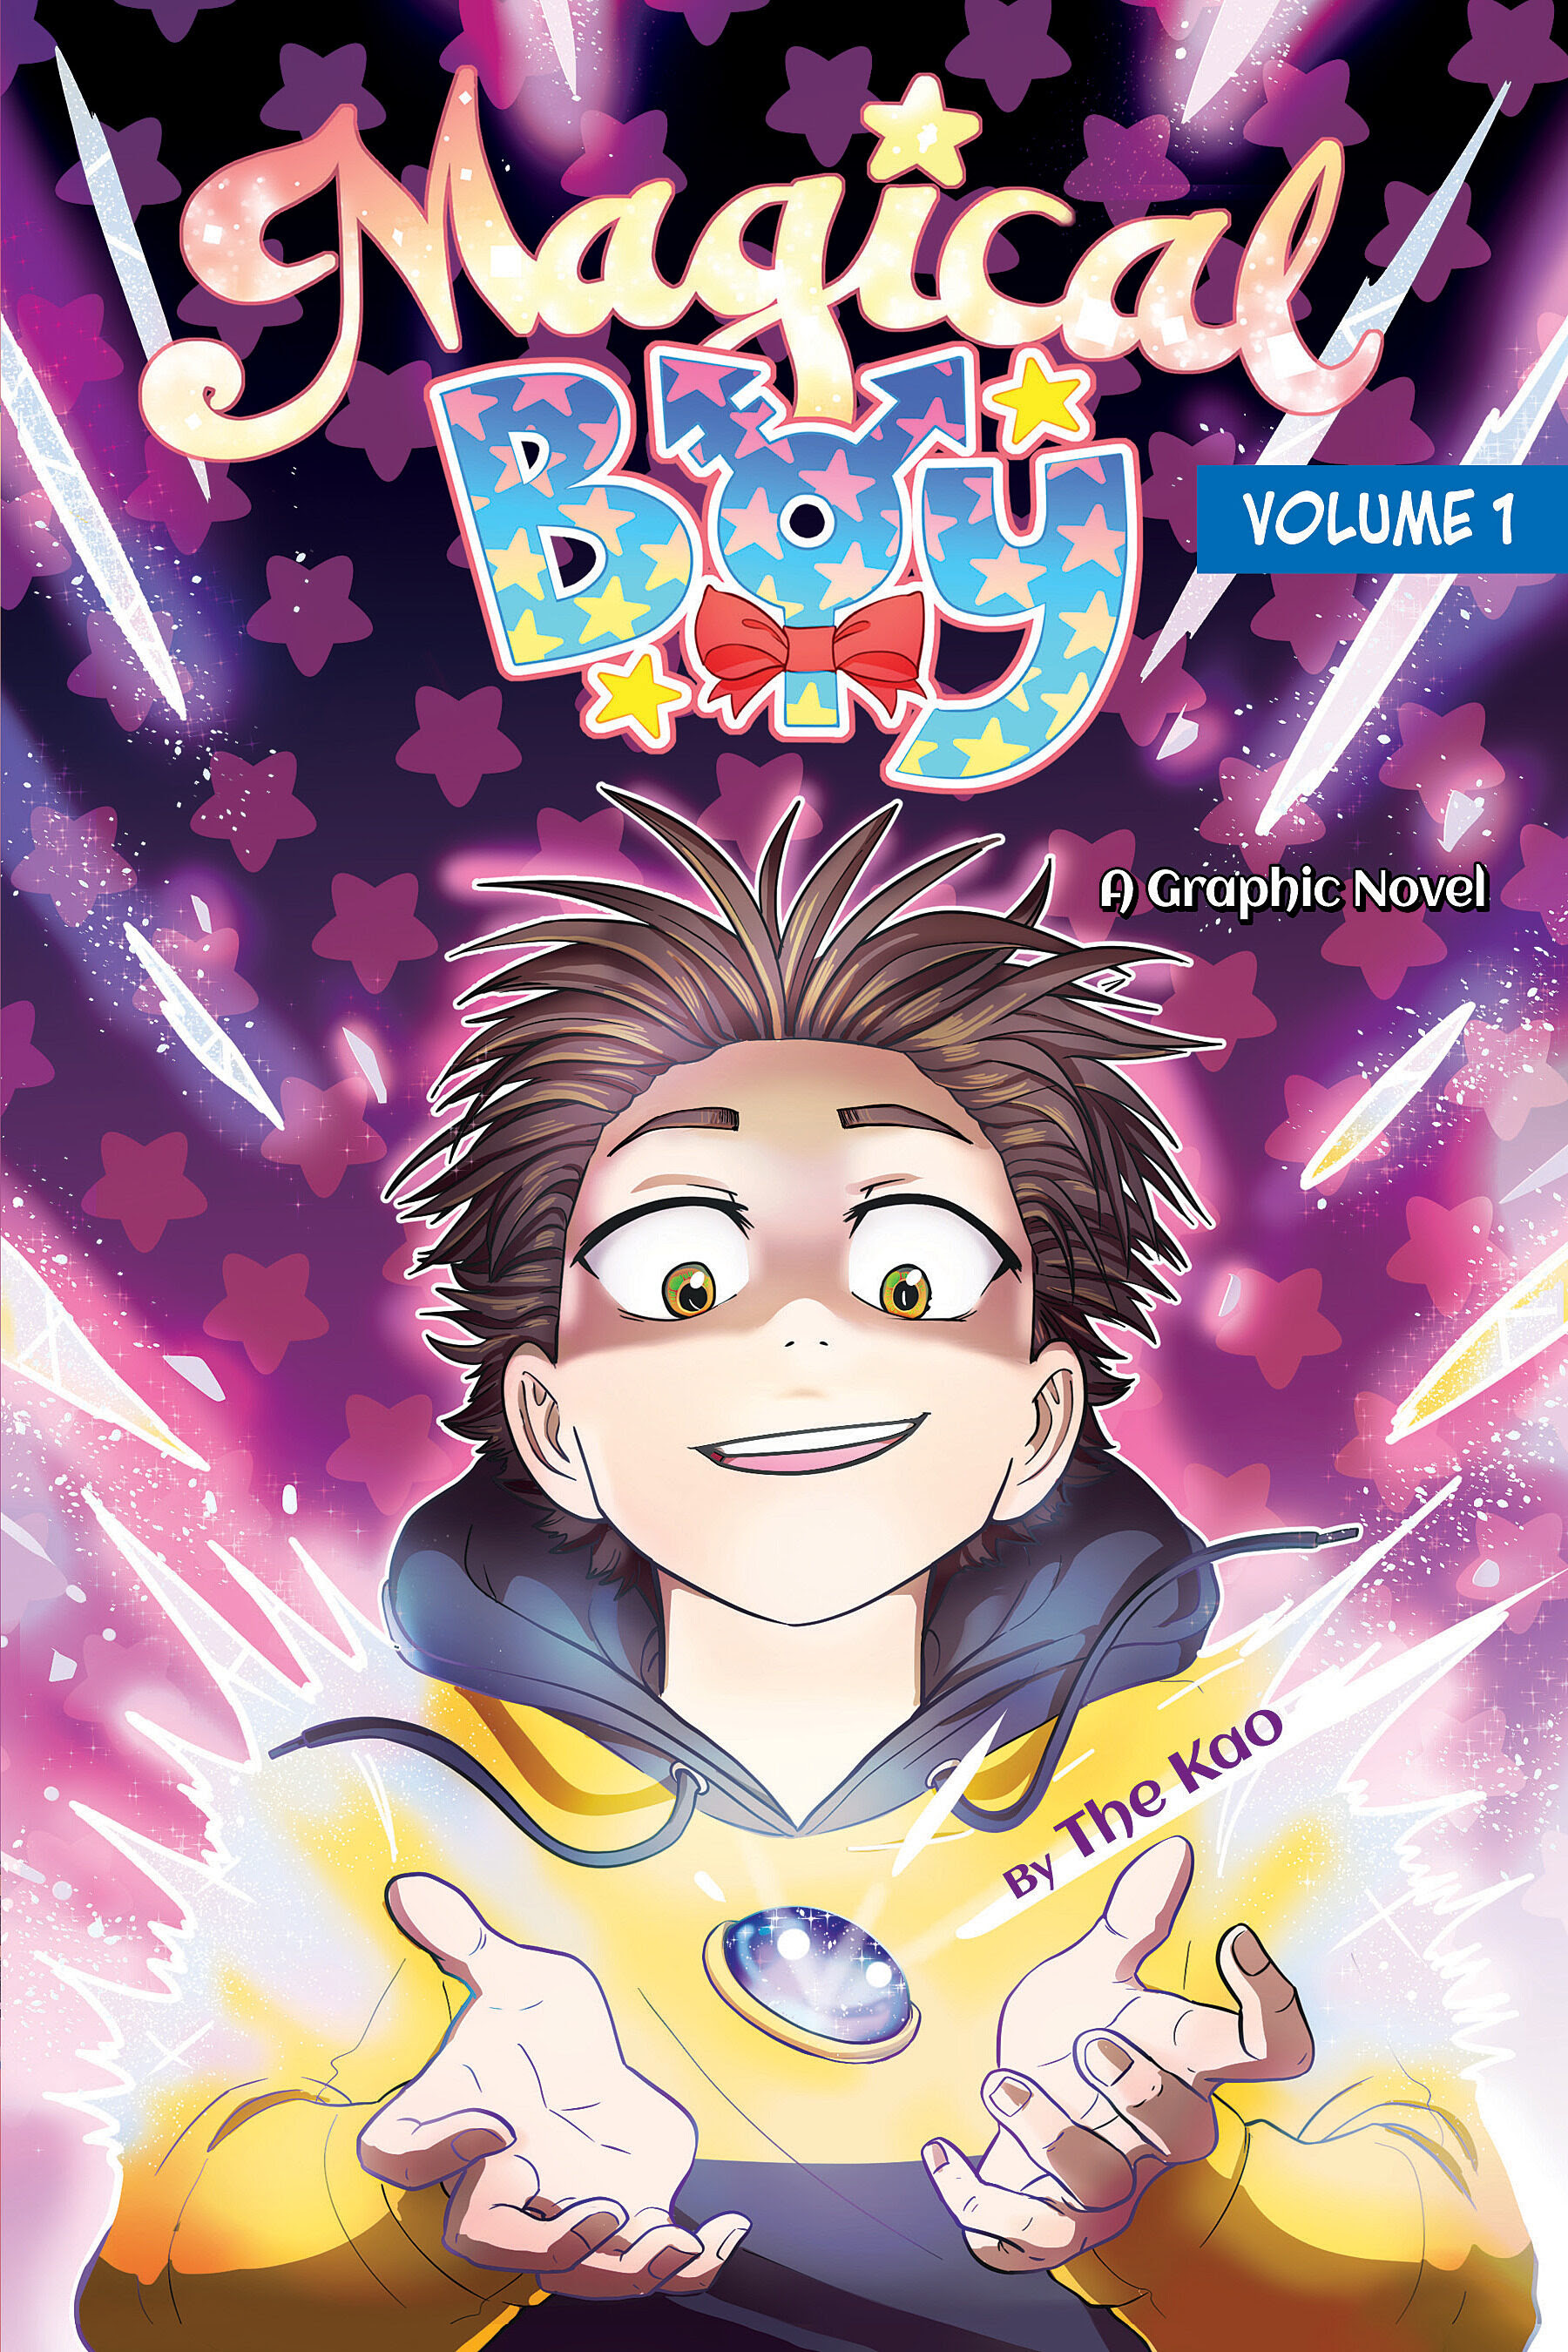 pdf download Magical Boy Volume 1: A Graphic Novel